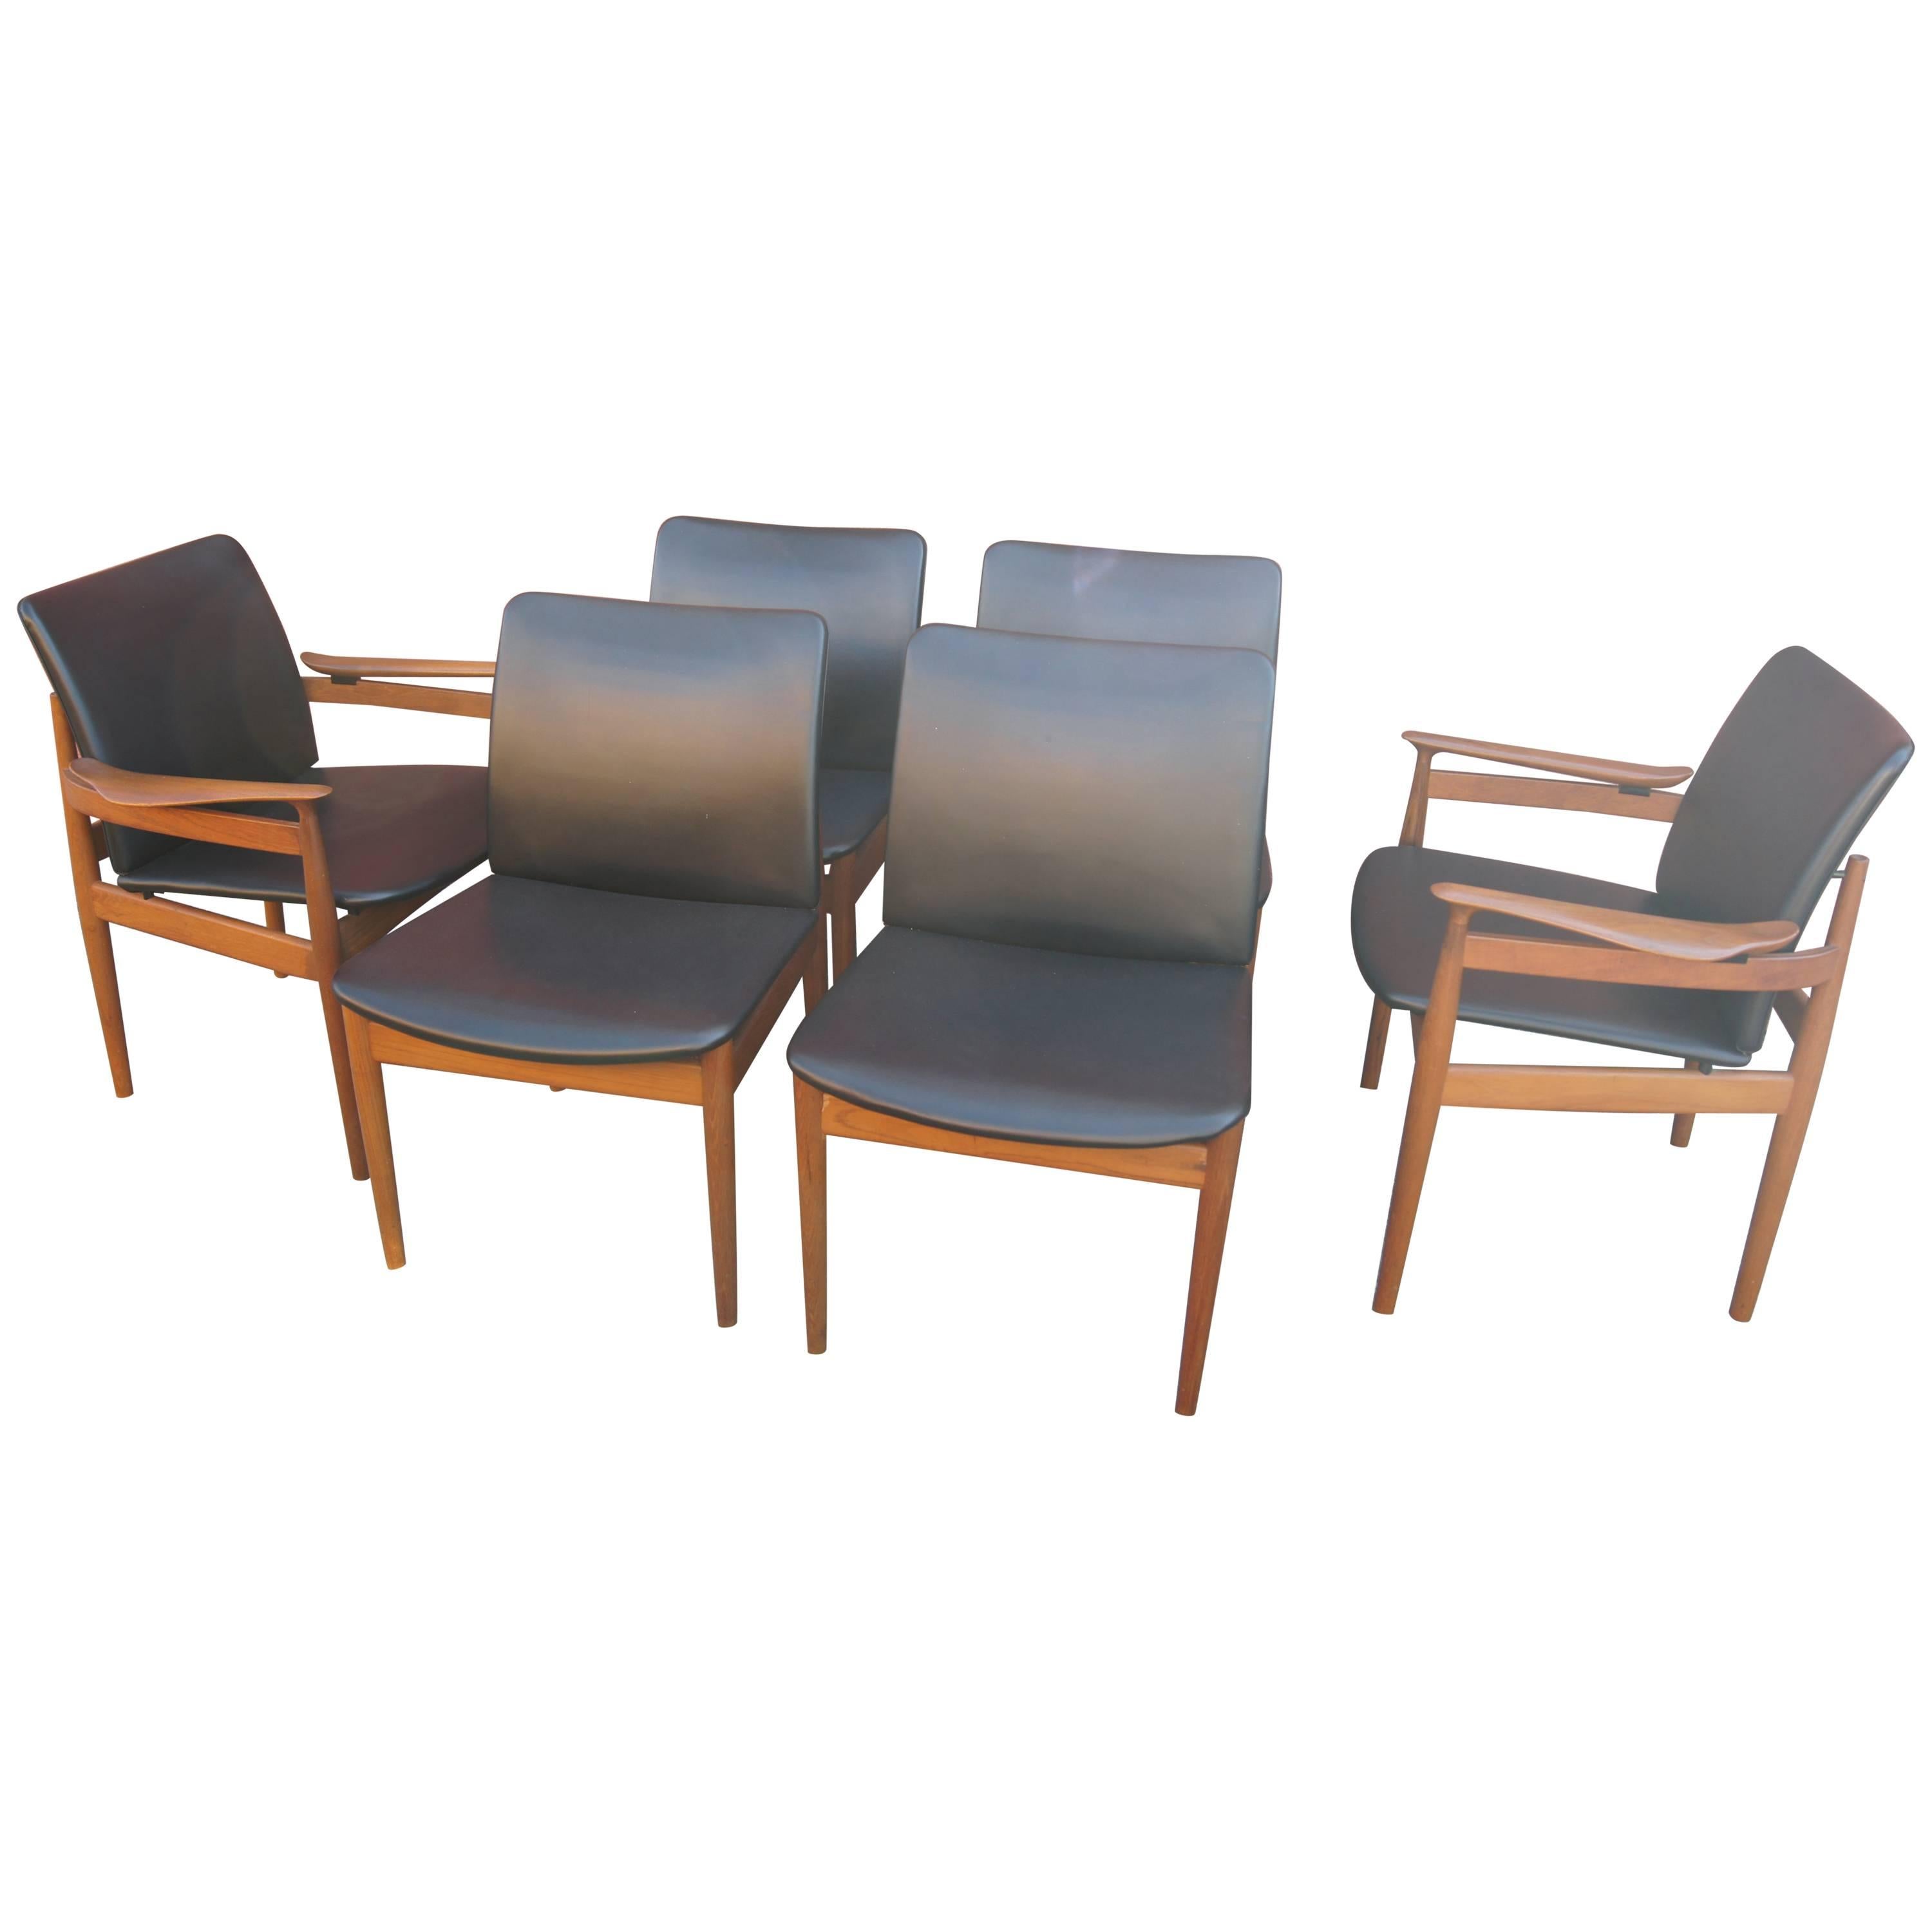 Set of Six Teak Dining Chairs, Models 191 & 192, by Finn Juhl